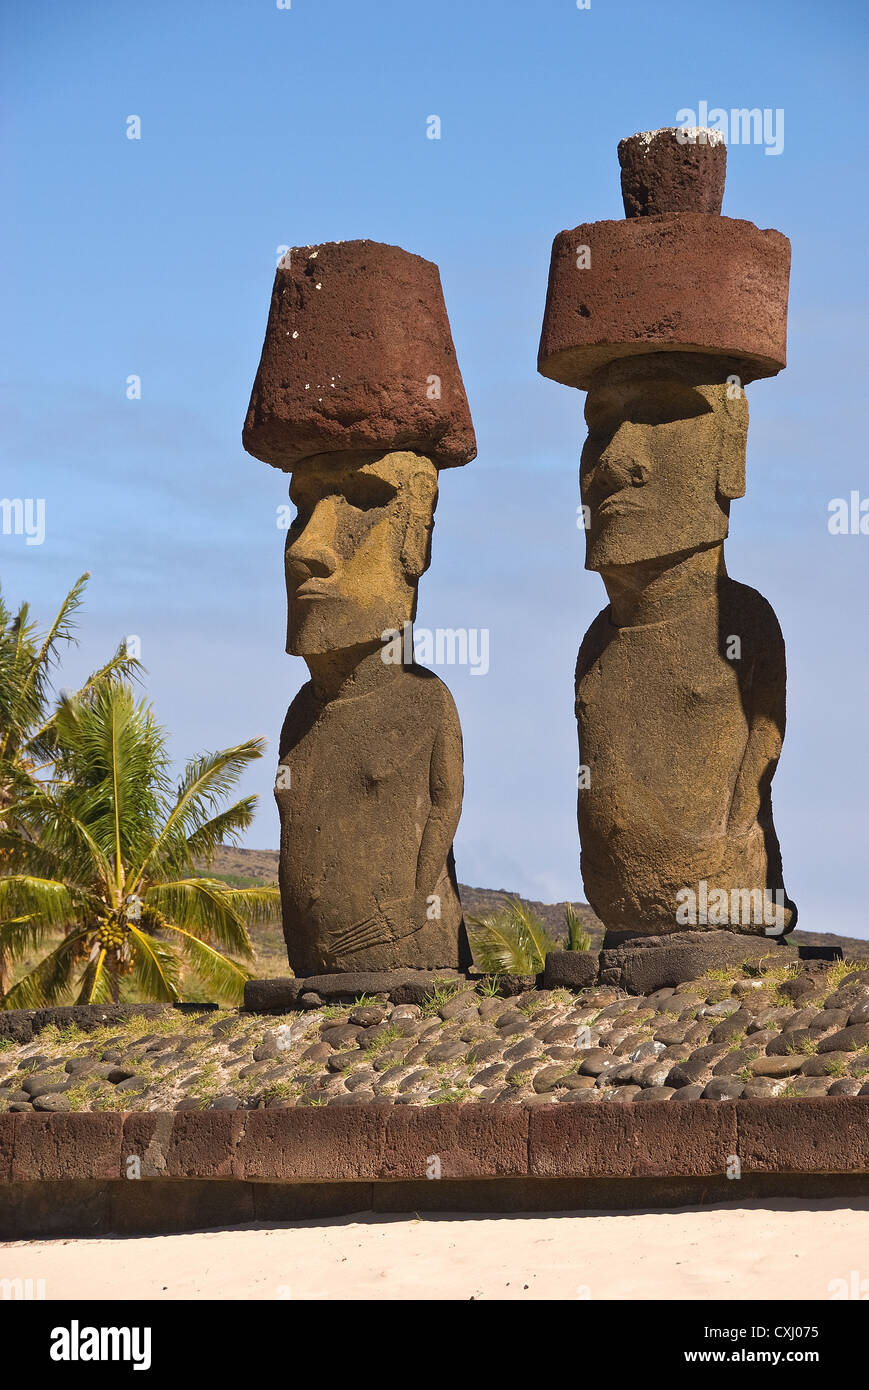 Elk198-5211v Cile, Isola di Pasqua, Anakena Ahu Nau Nau, moai statue Foto Stock